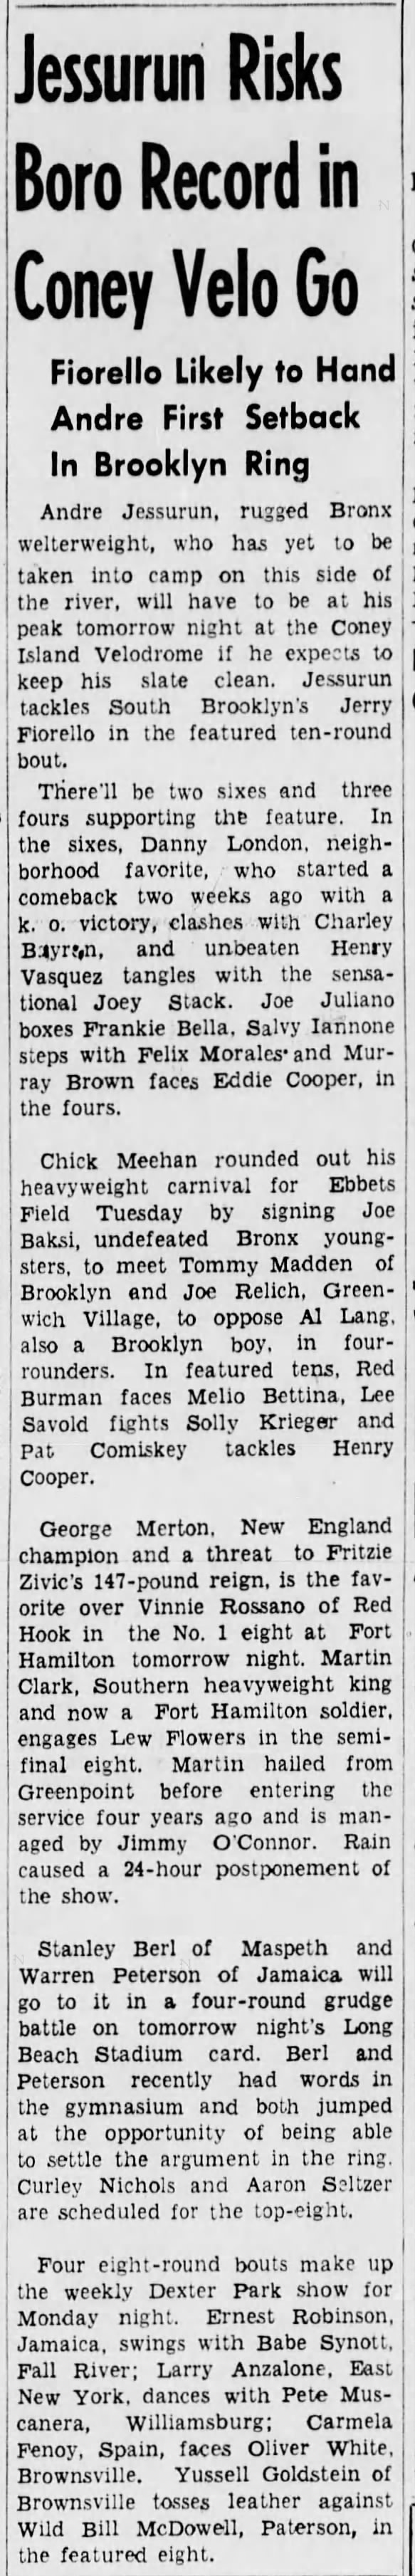 The Brooklyn Daily Eagle newspaper, Brooklyn, New York, 17 Jul 1941, p. 15.